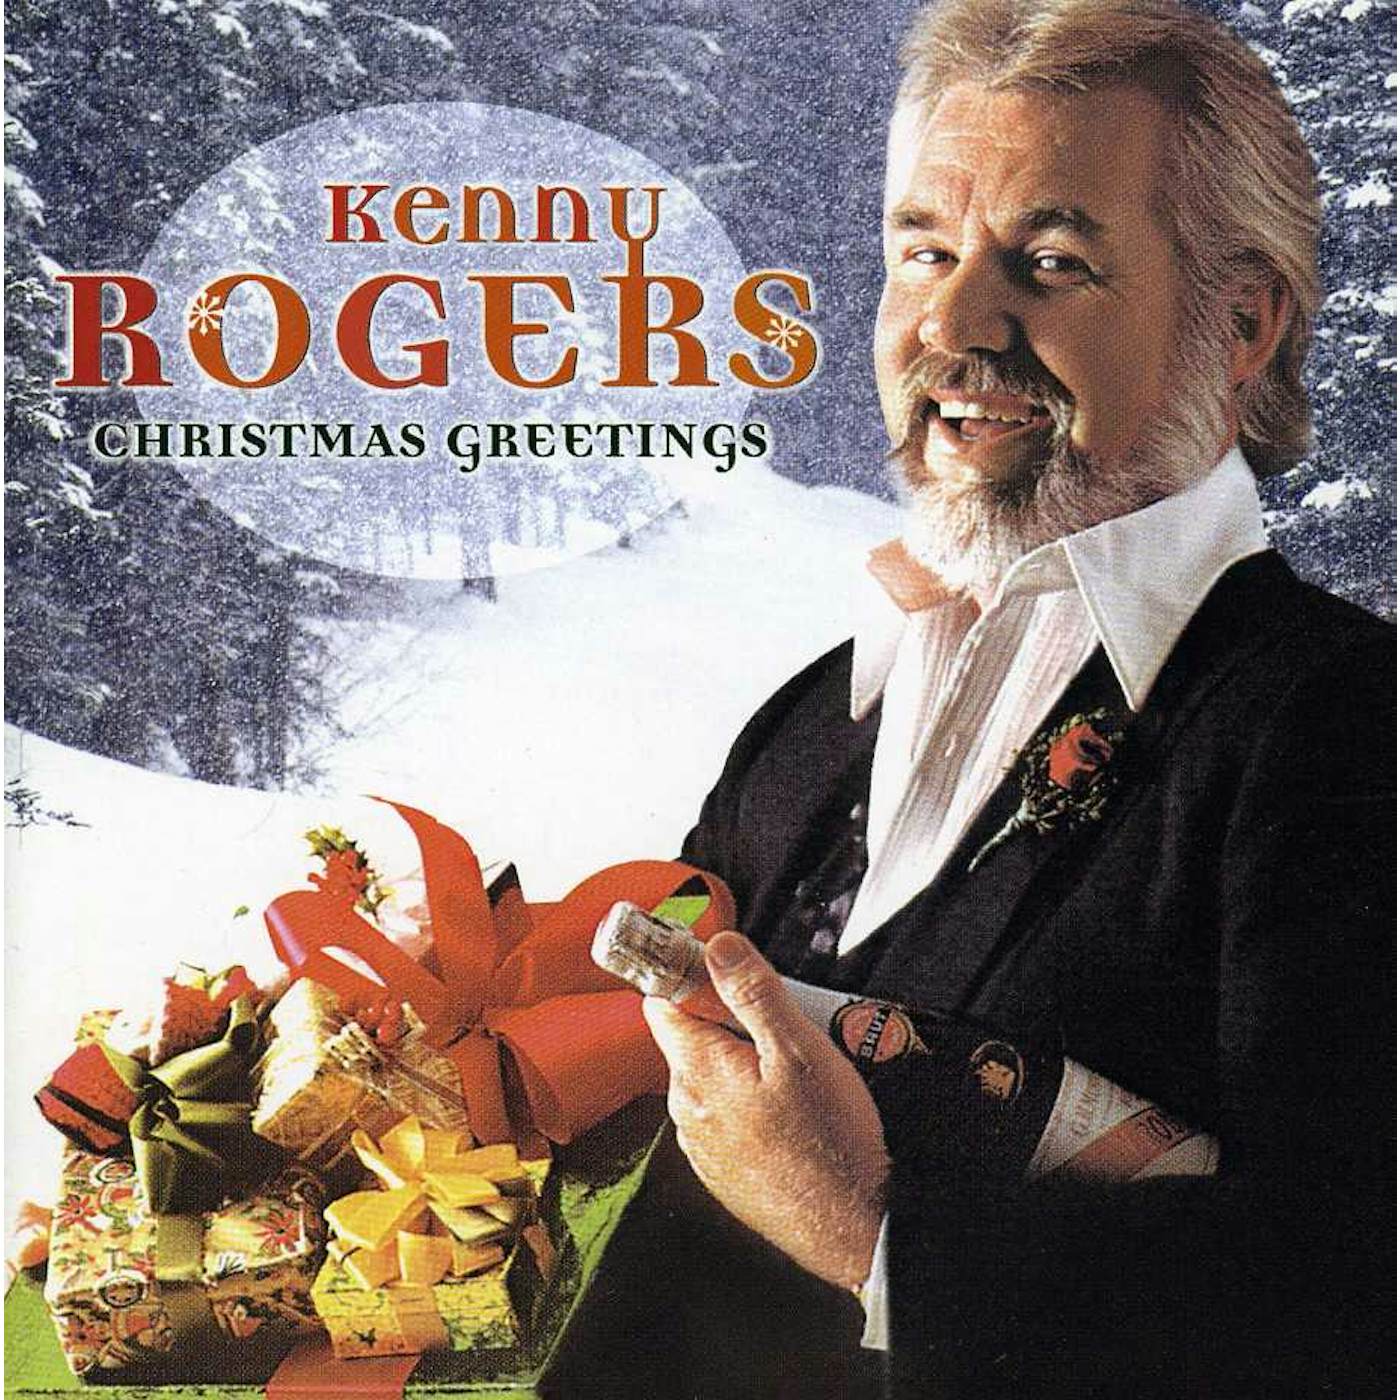 Kenny Rogers CHRISTMAS GREETINGS CD